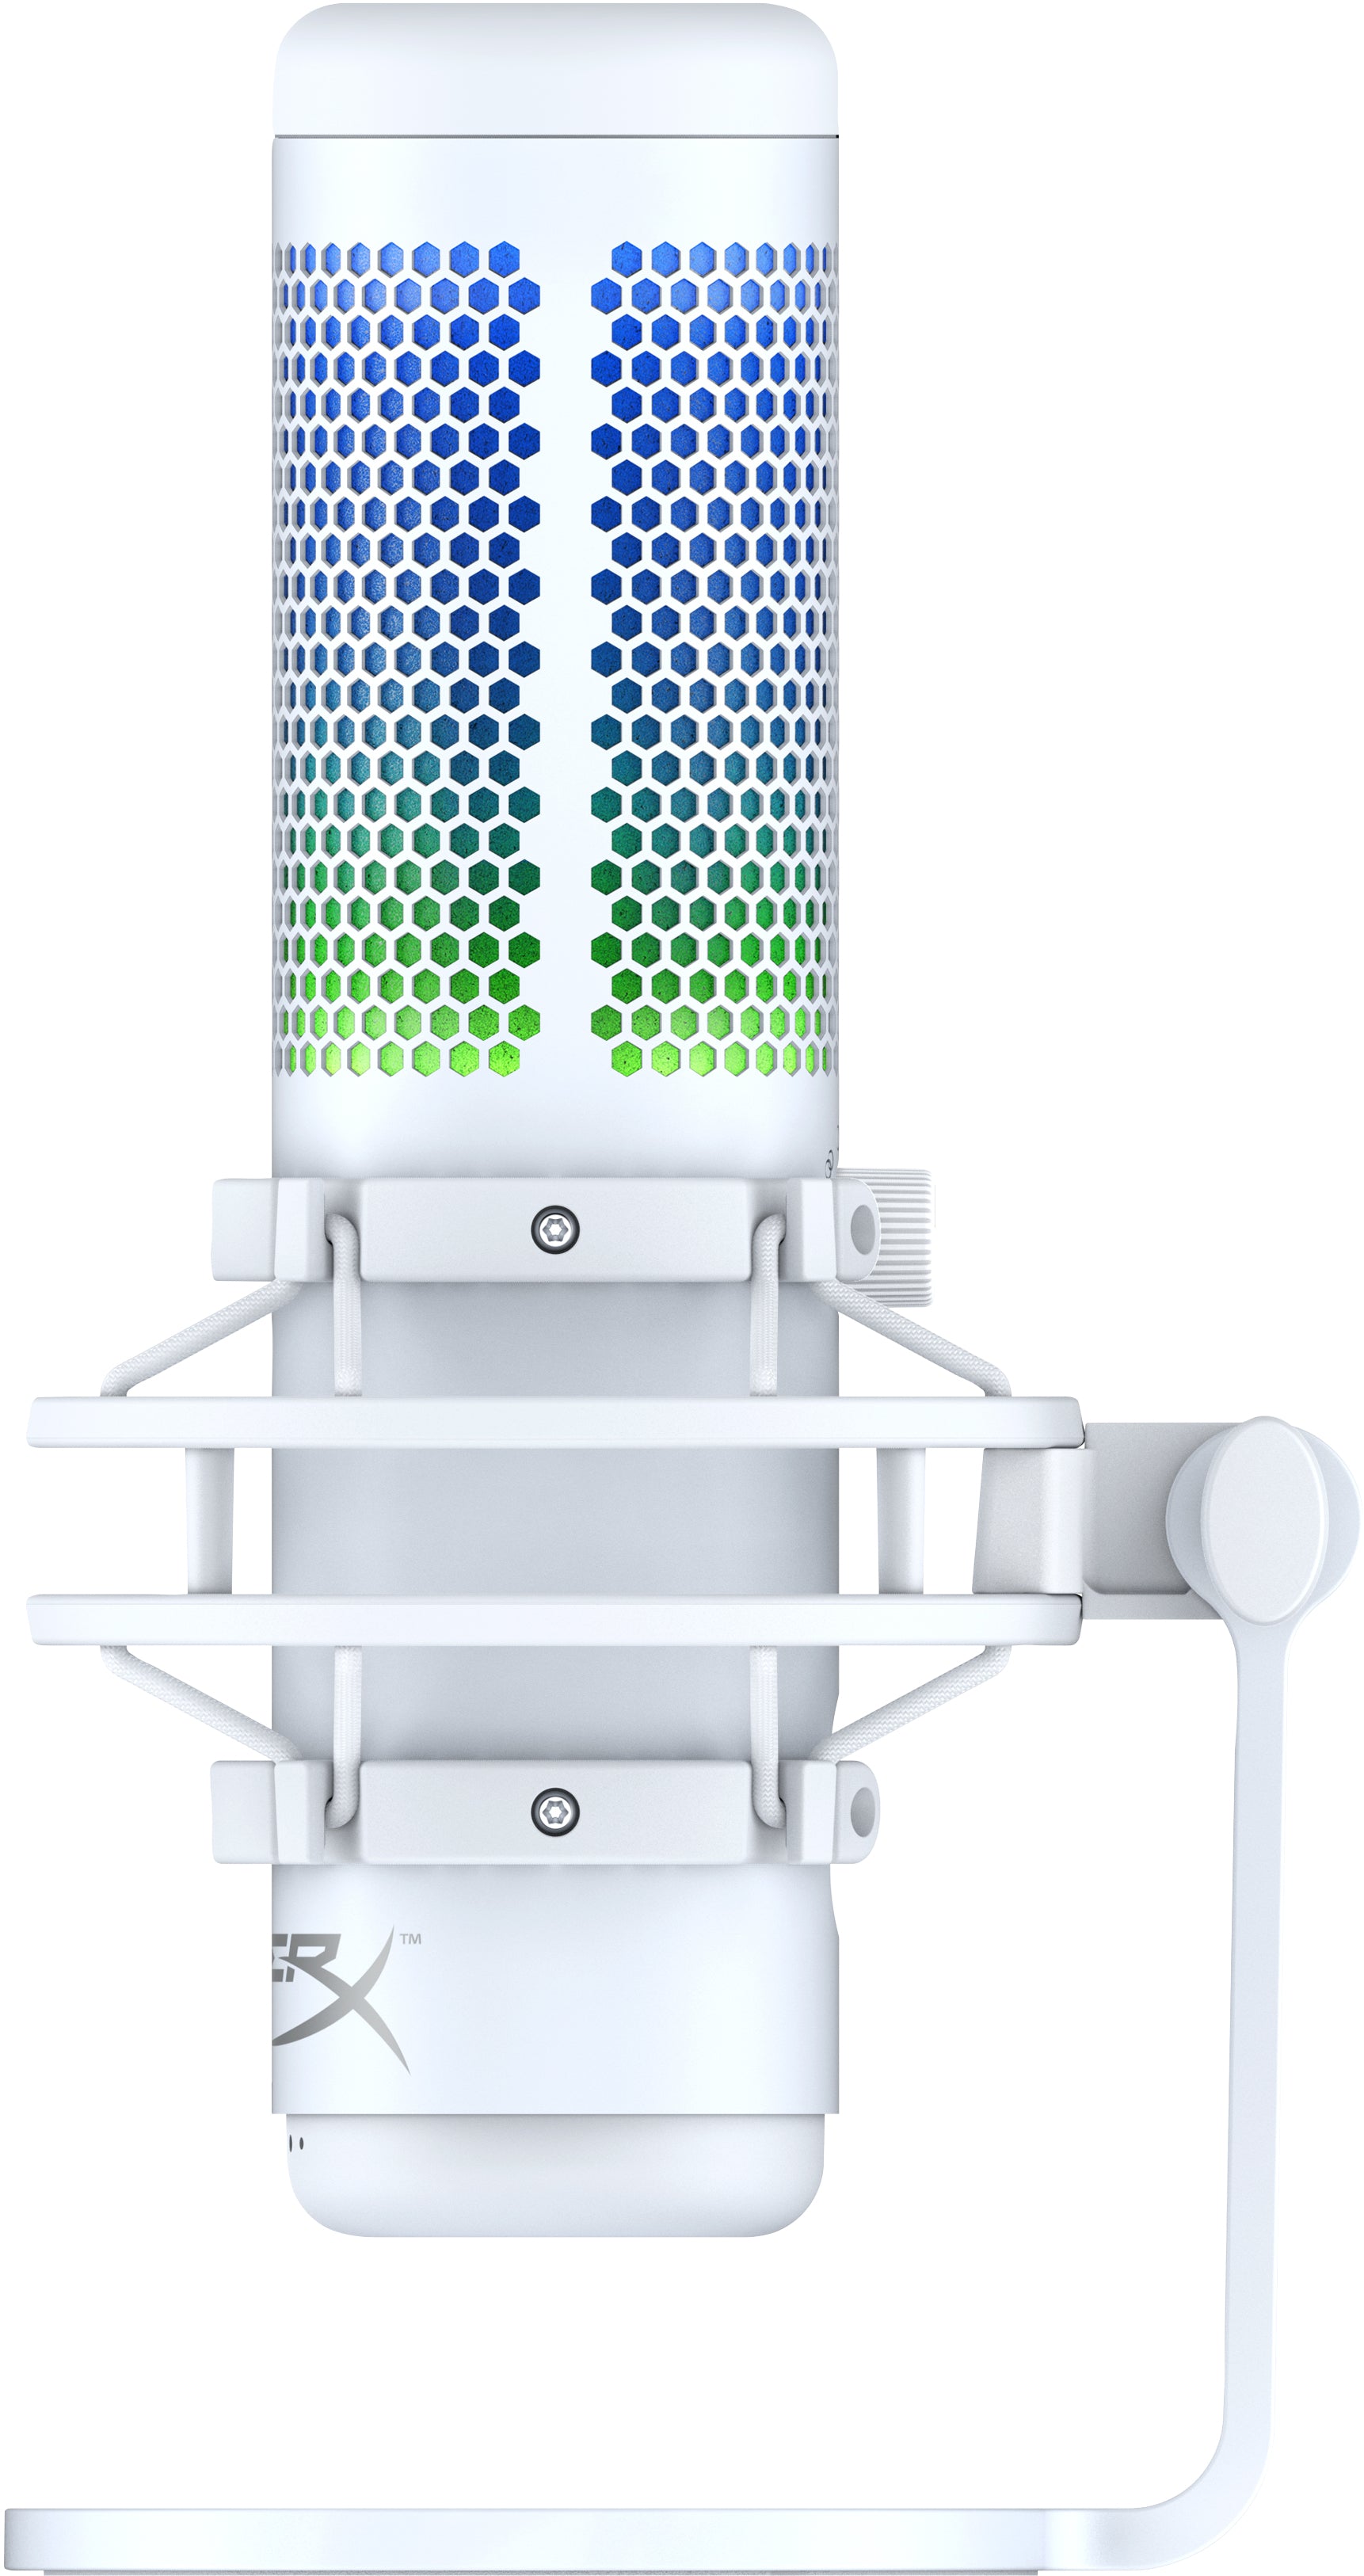 HyperX QuadCast S Mikrofon - Hvid